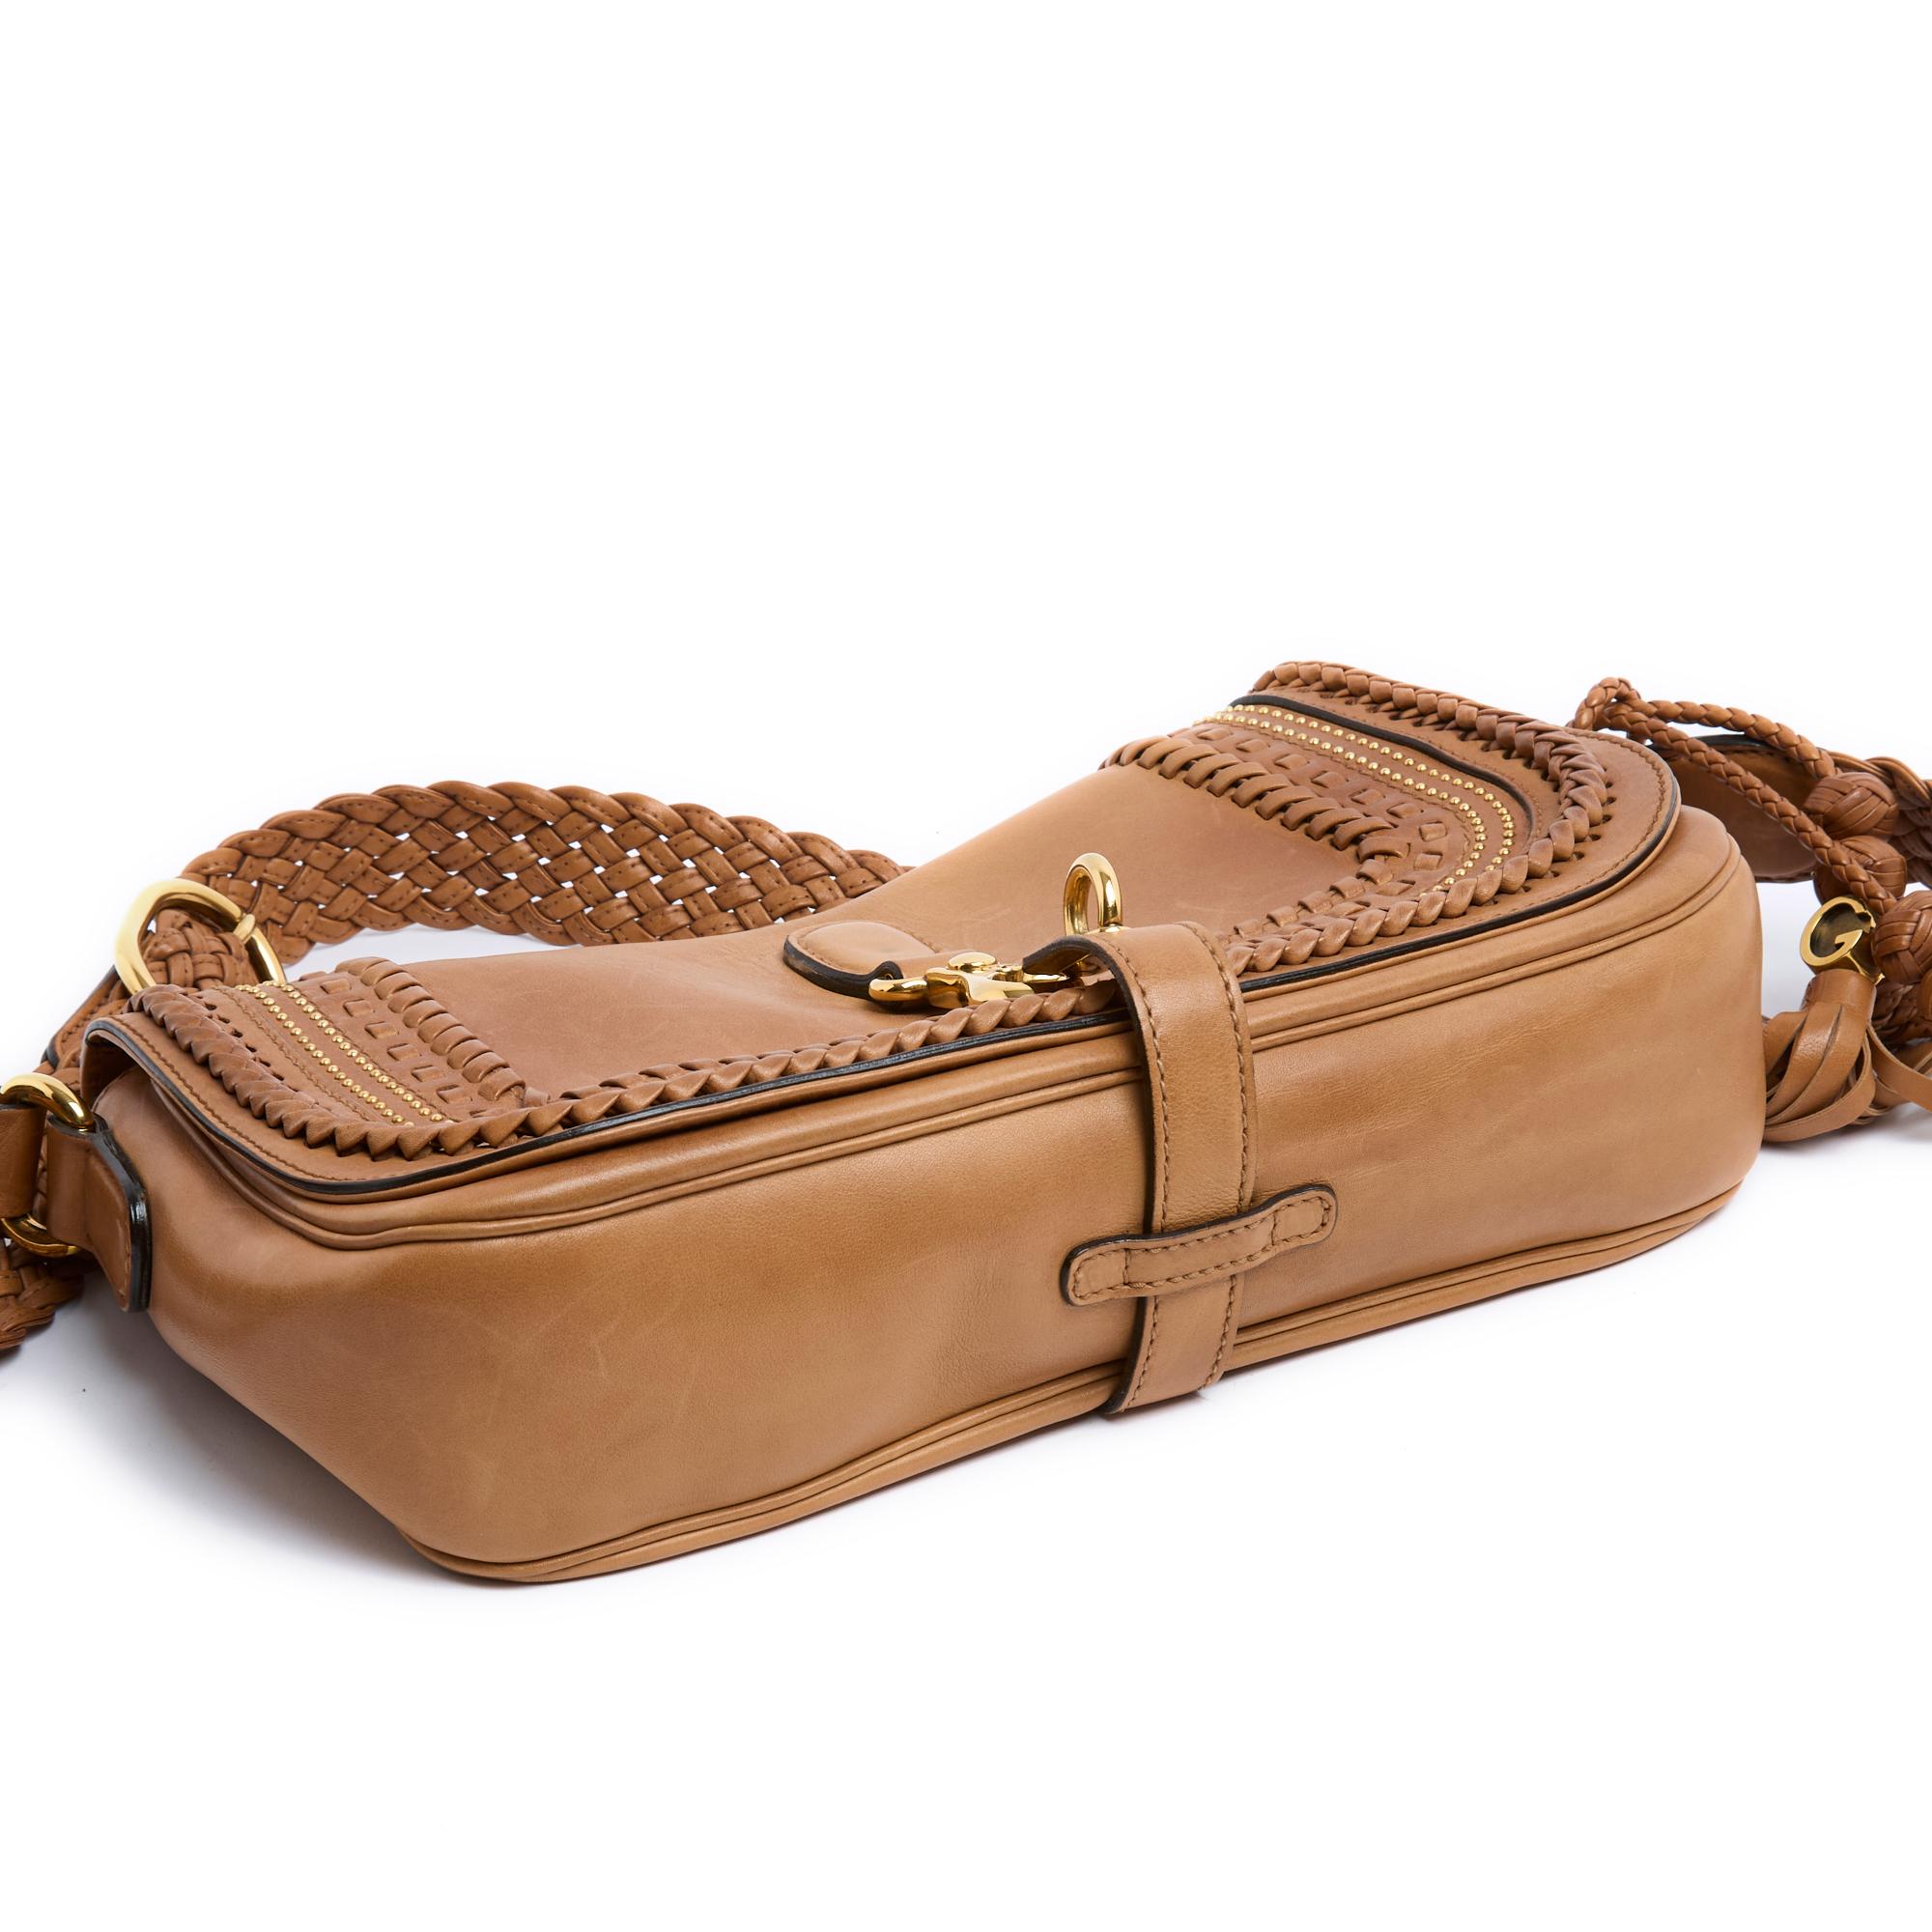 Gucci sac Marrakech Natural Leather Intrecciato Bag Limited Edition 3